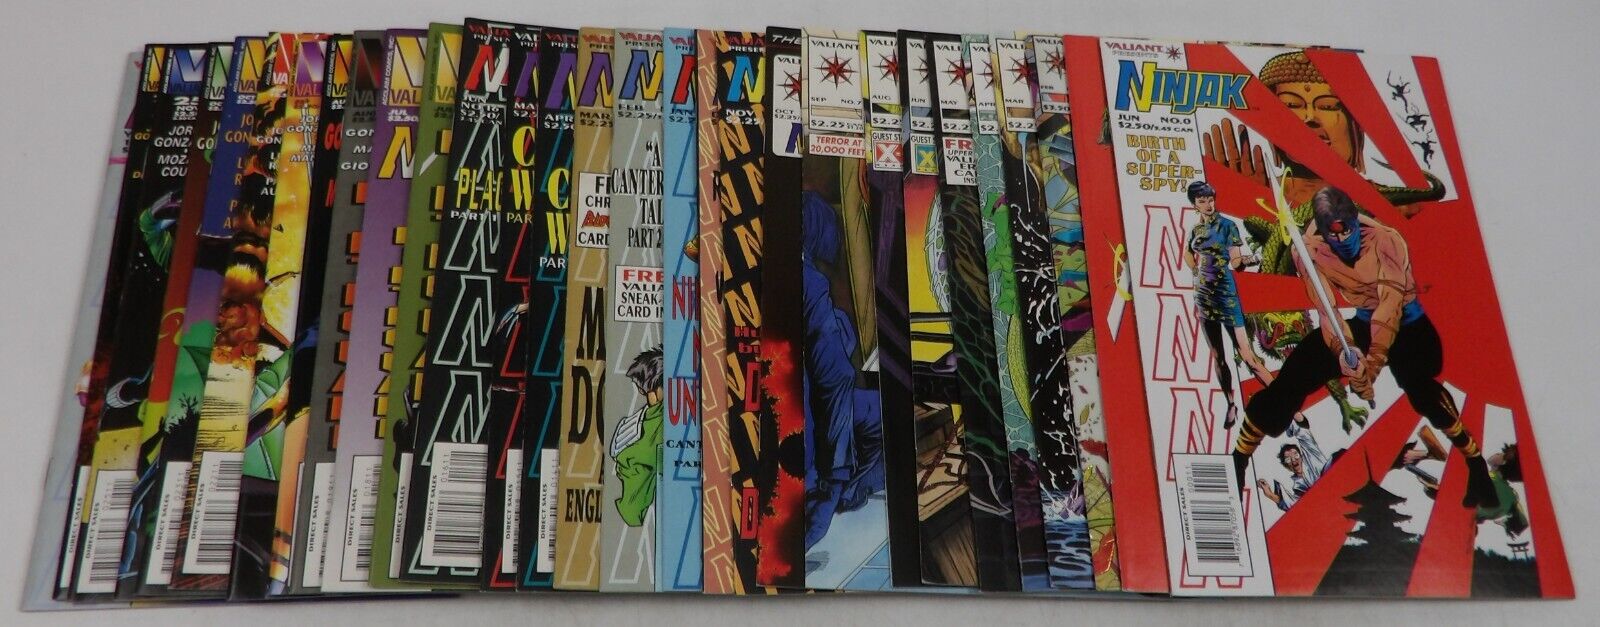 Ninjak #0 00 & 1-26 VF/NM complete series + Yearbook - Valiant comics set lot